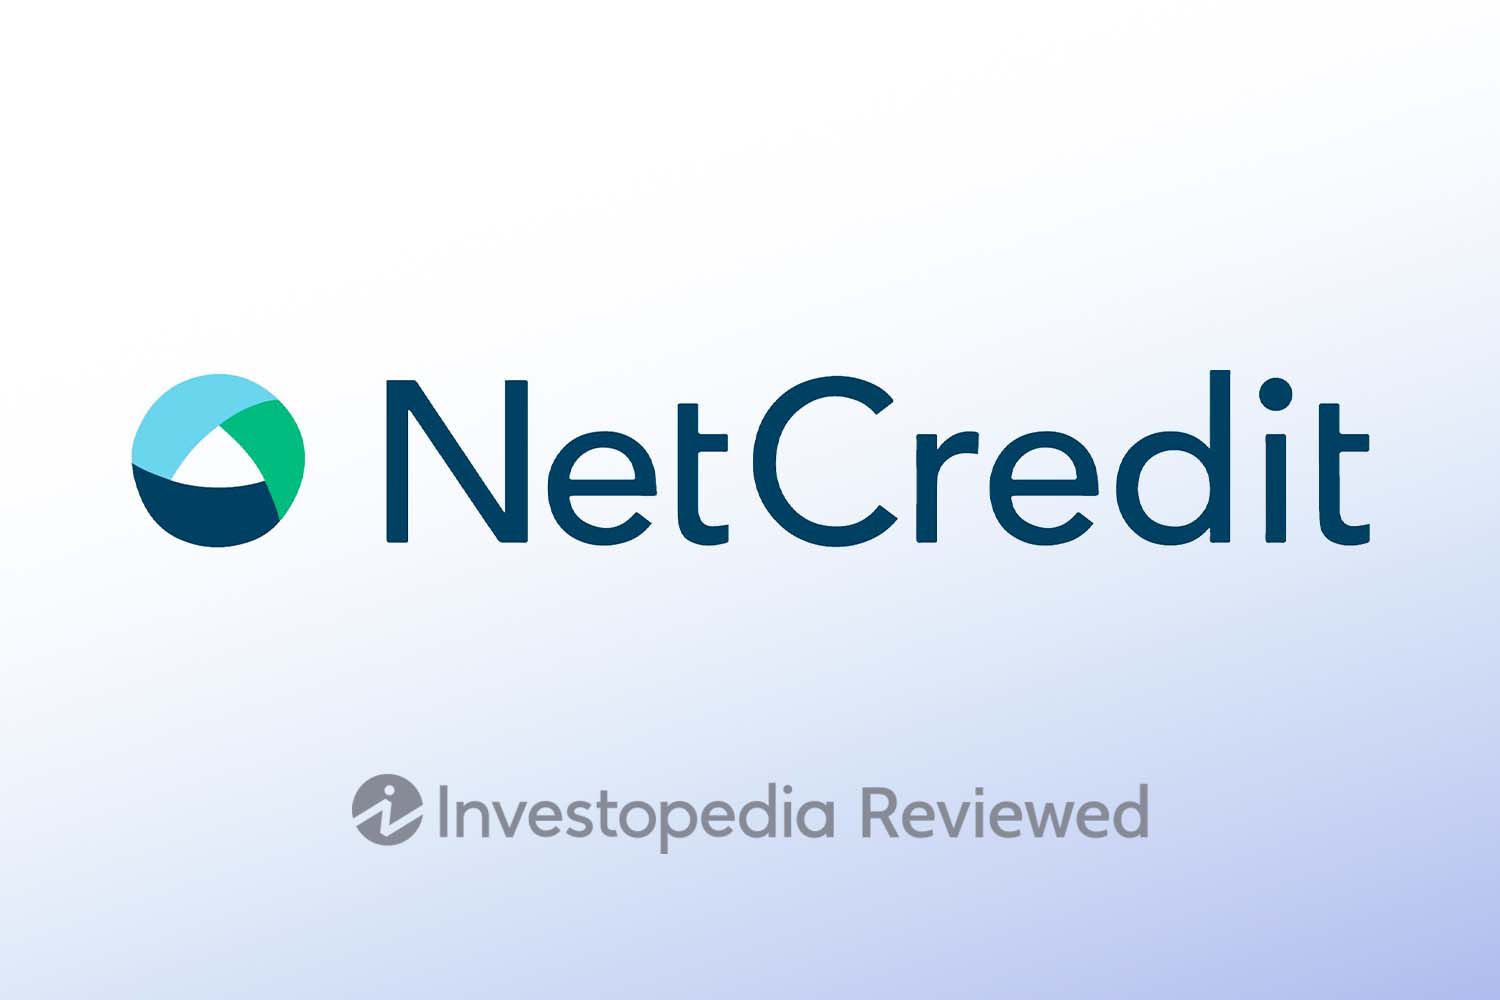 NetCredit Recirc logo